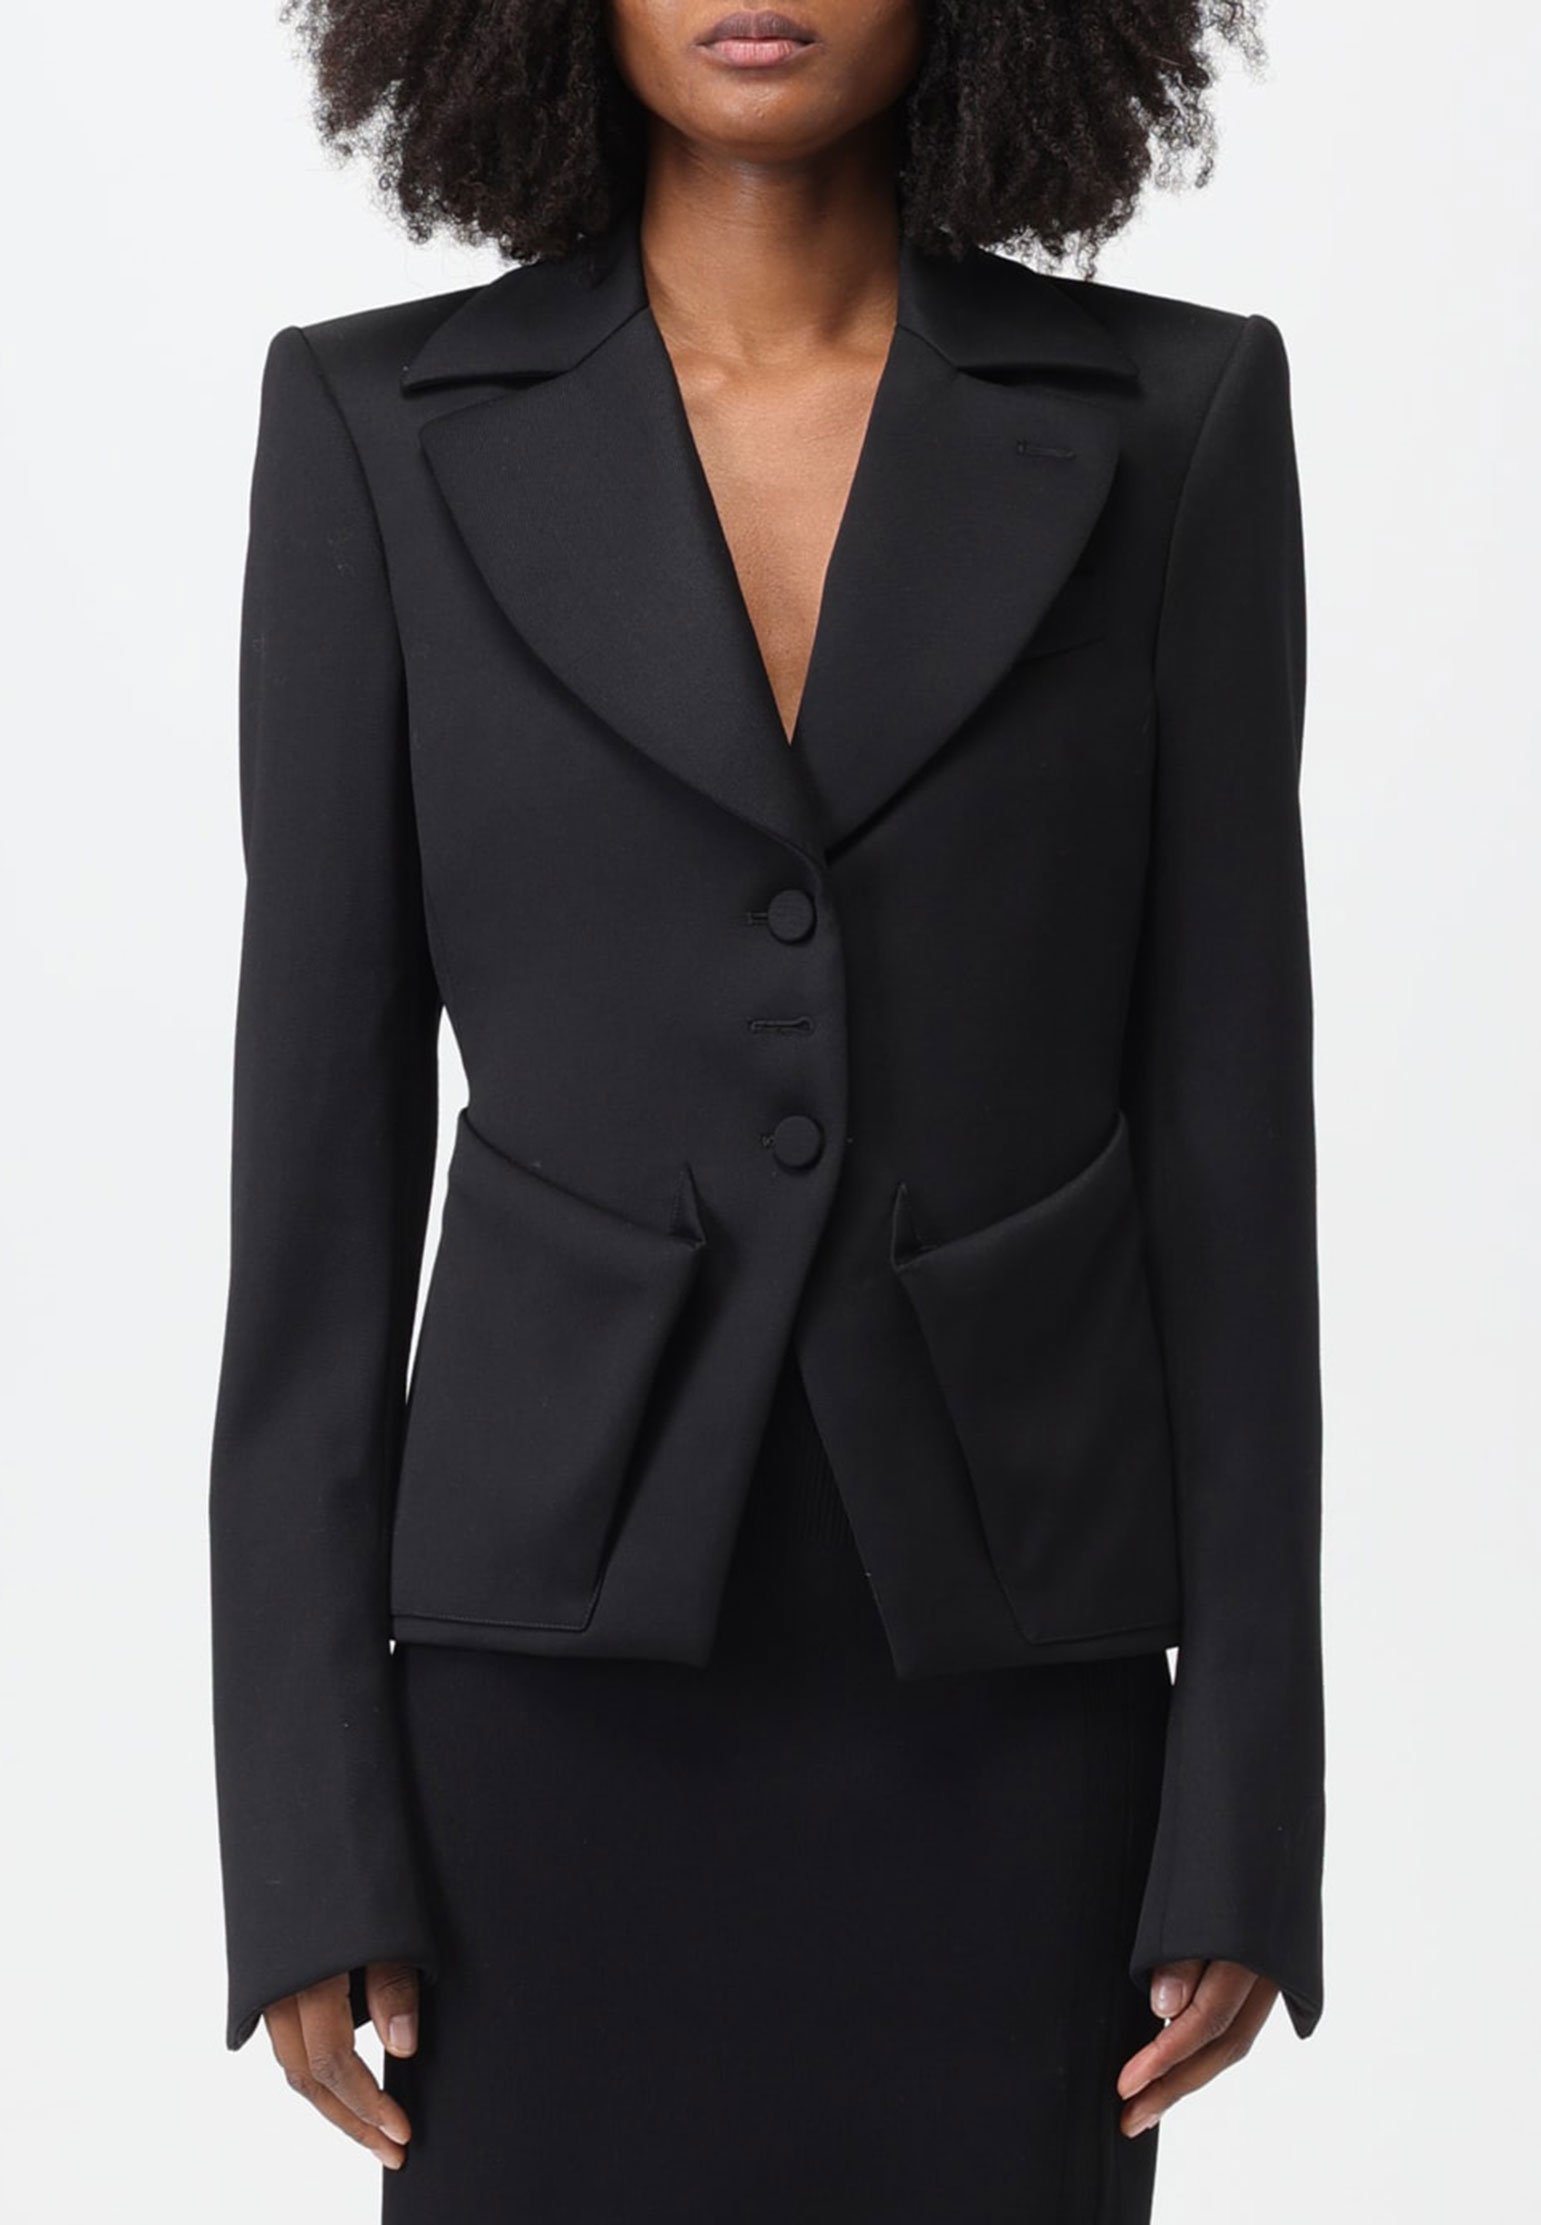 Jacket TOM FORD Color: black (Code: 2973) in online store Allure